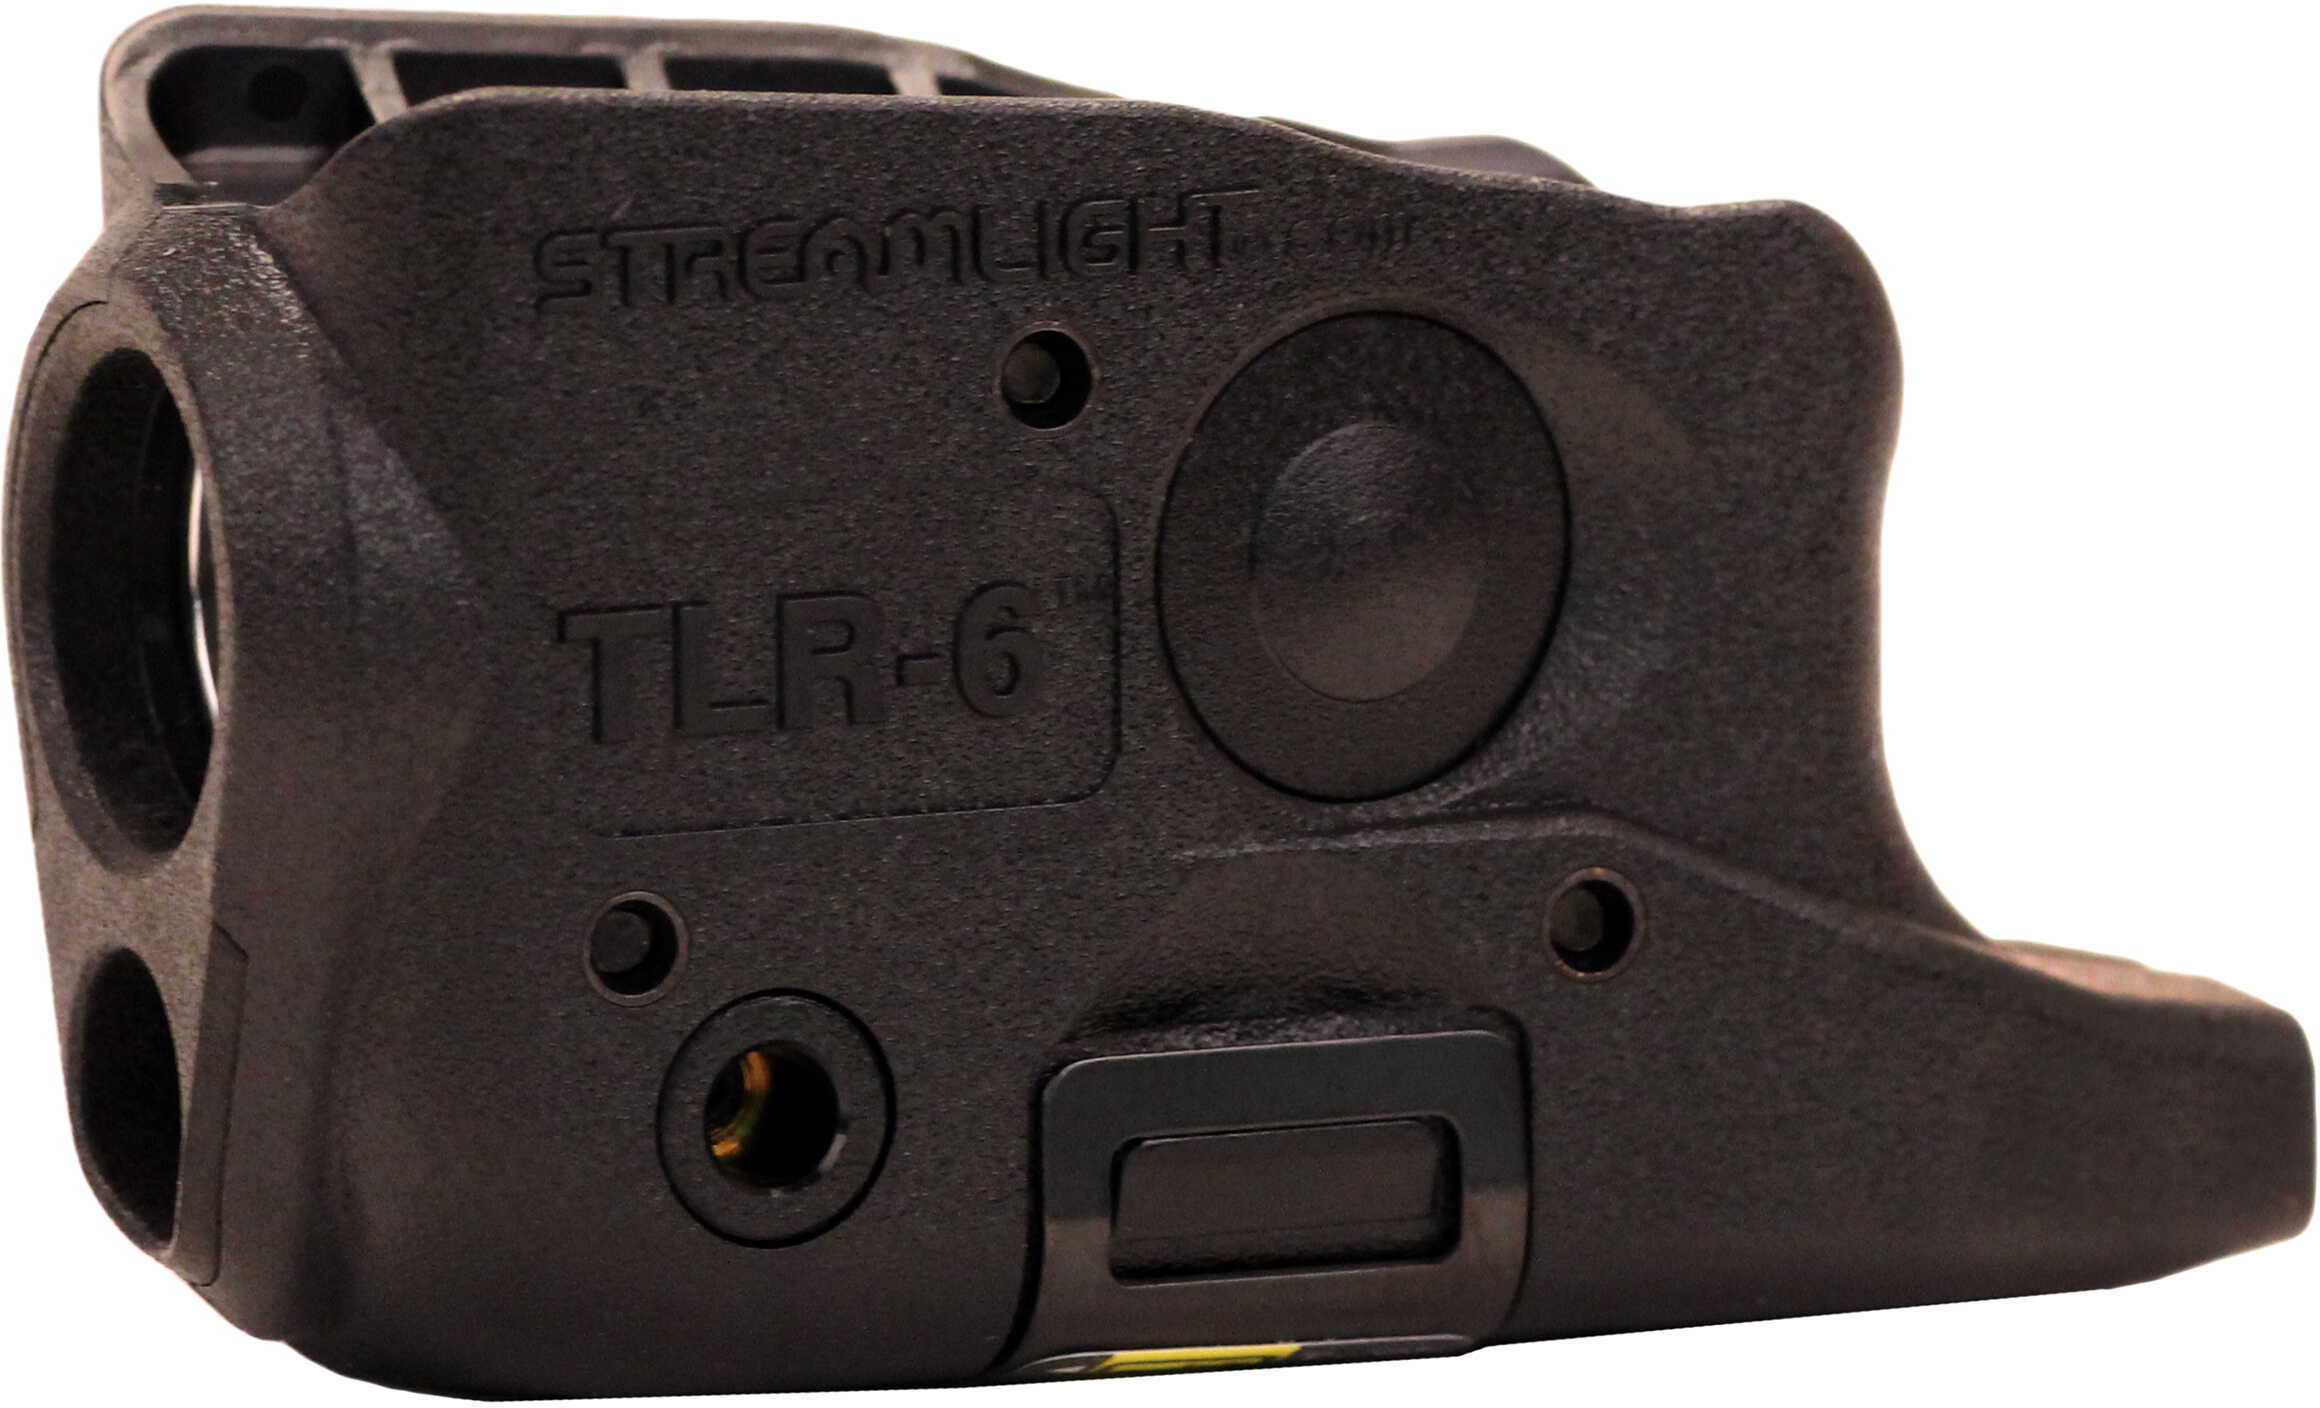 Streamlight TLR-6 Tac Light w/laser For Glock 26/27 White LED and Red Laser Includes 2 CR 1/3N Lithium Batteries Black F